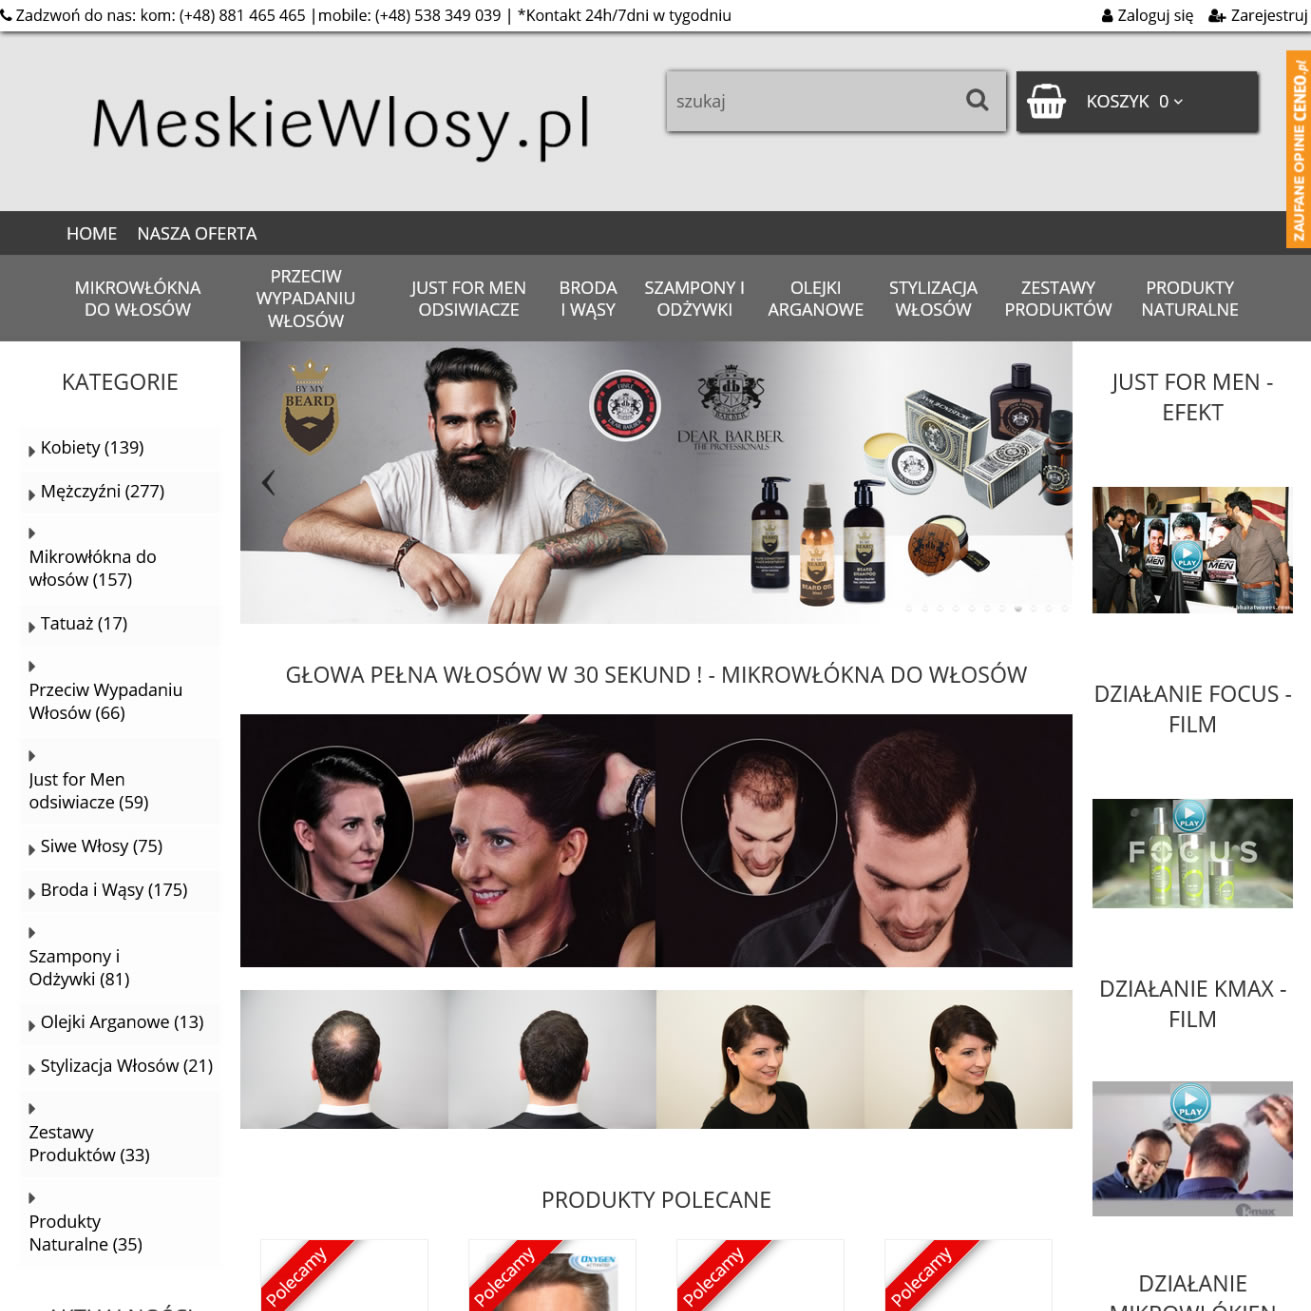 meskiewlosy.pl Image